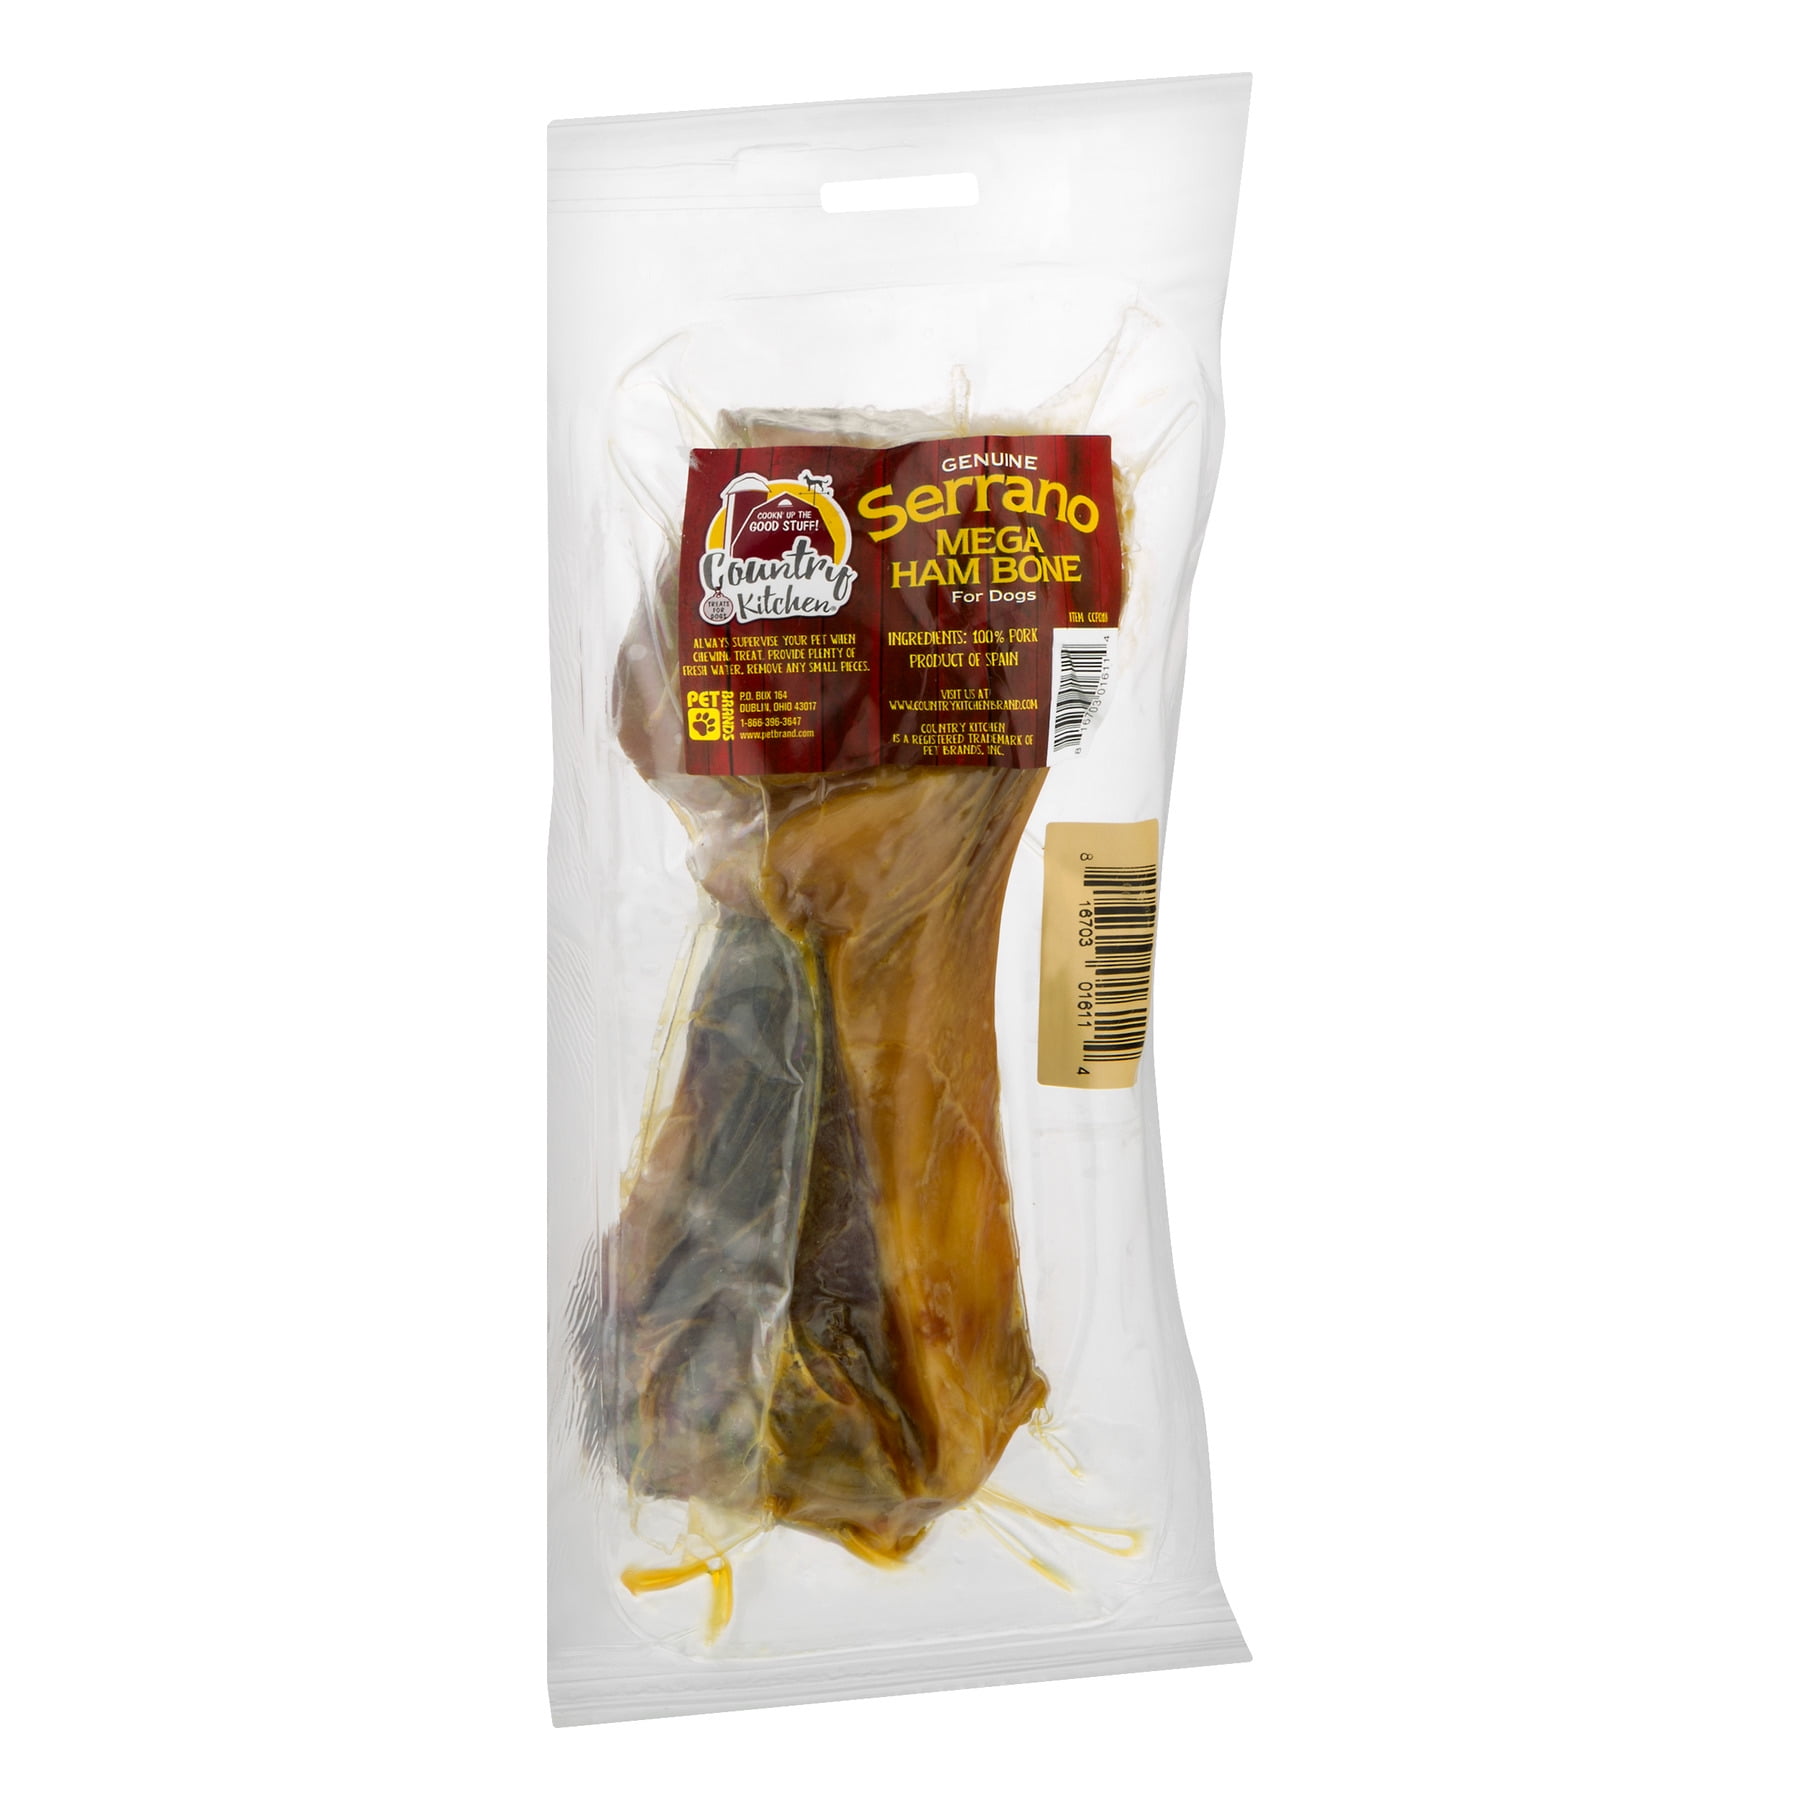 country kitchen serrano ham bone dog treat